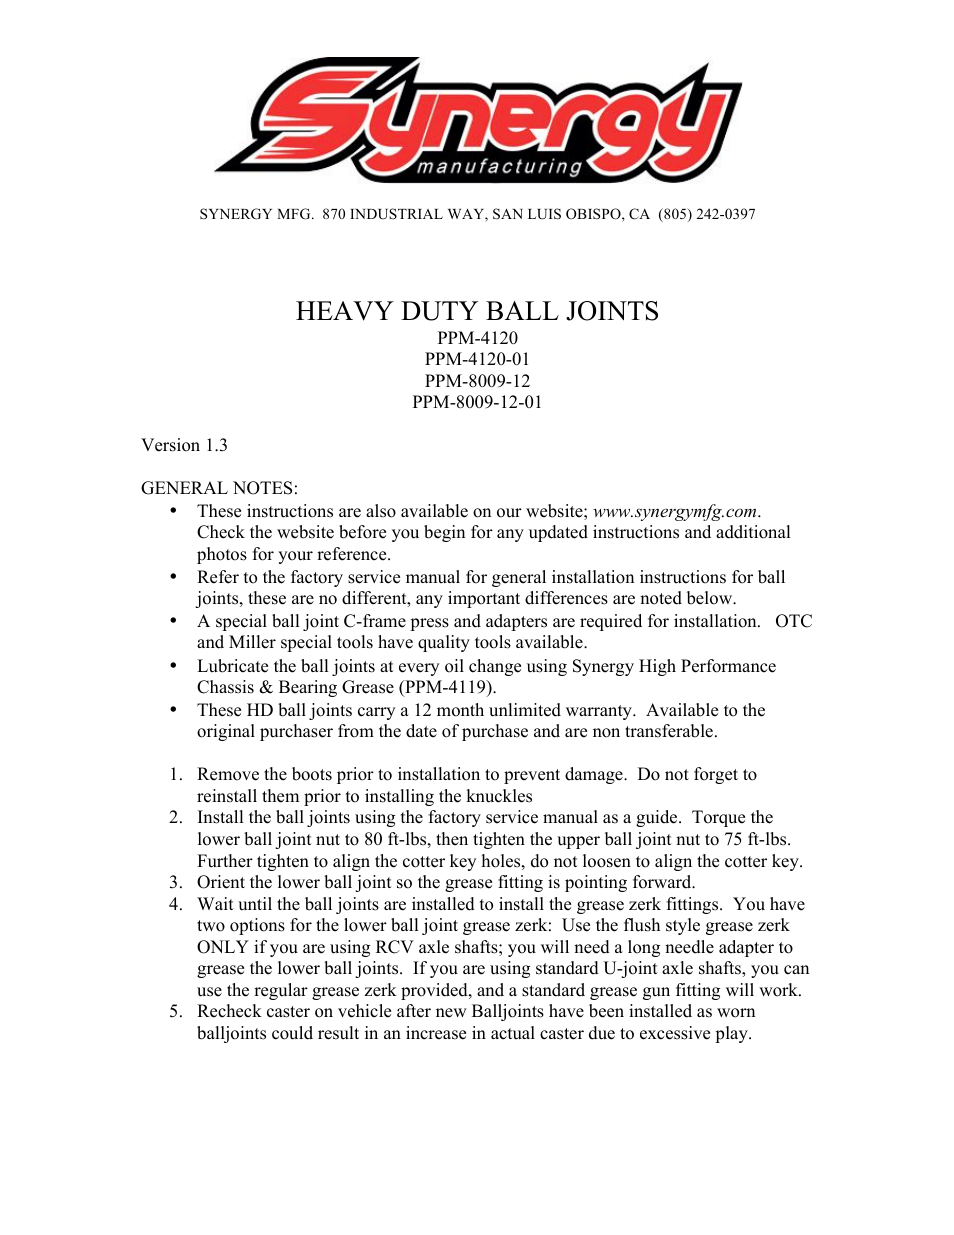 8009 Series - Heavy Duty Ball Joints